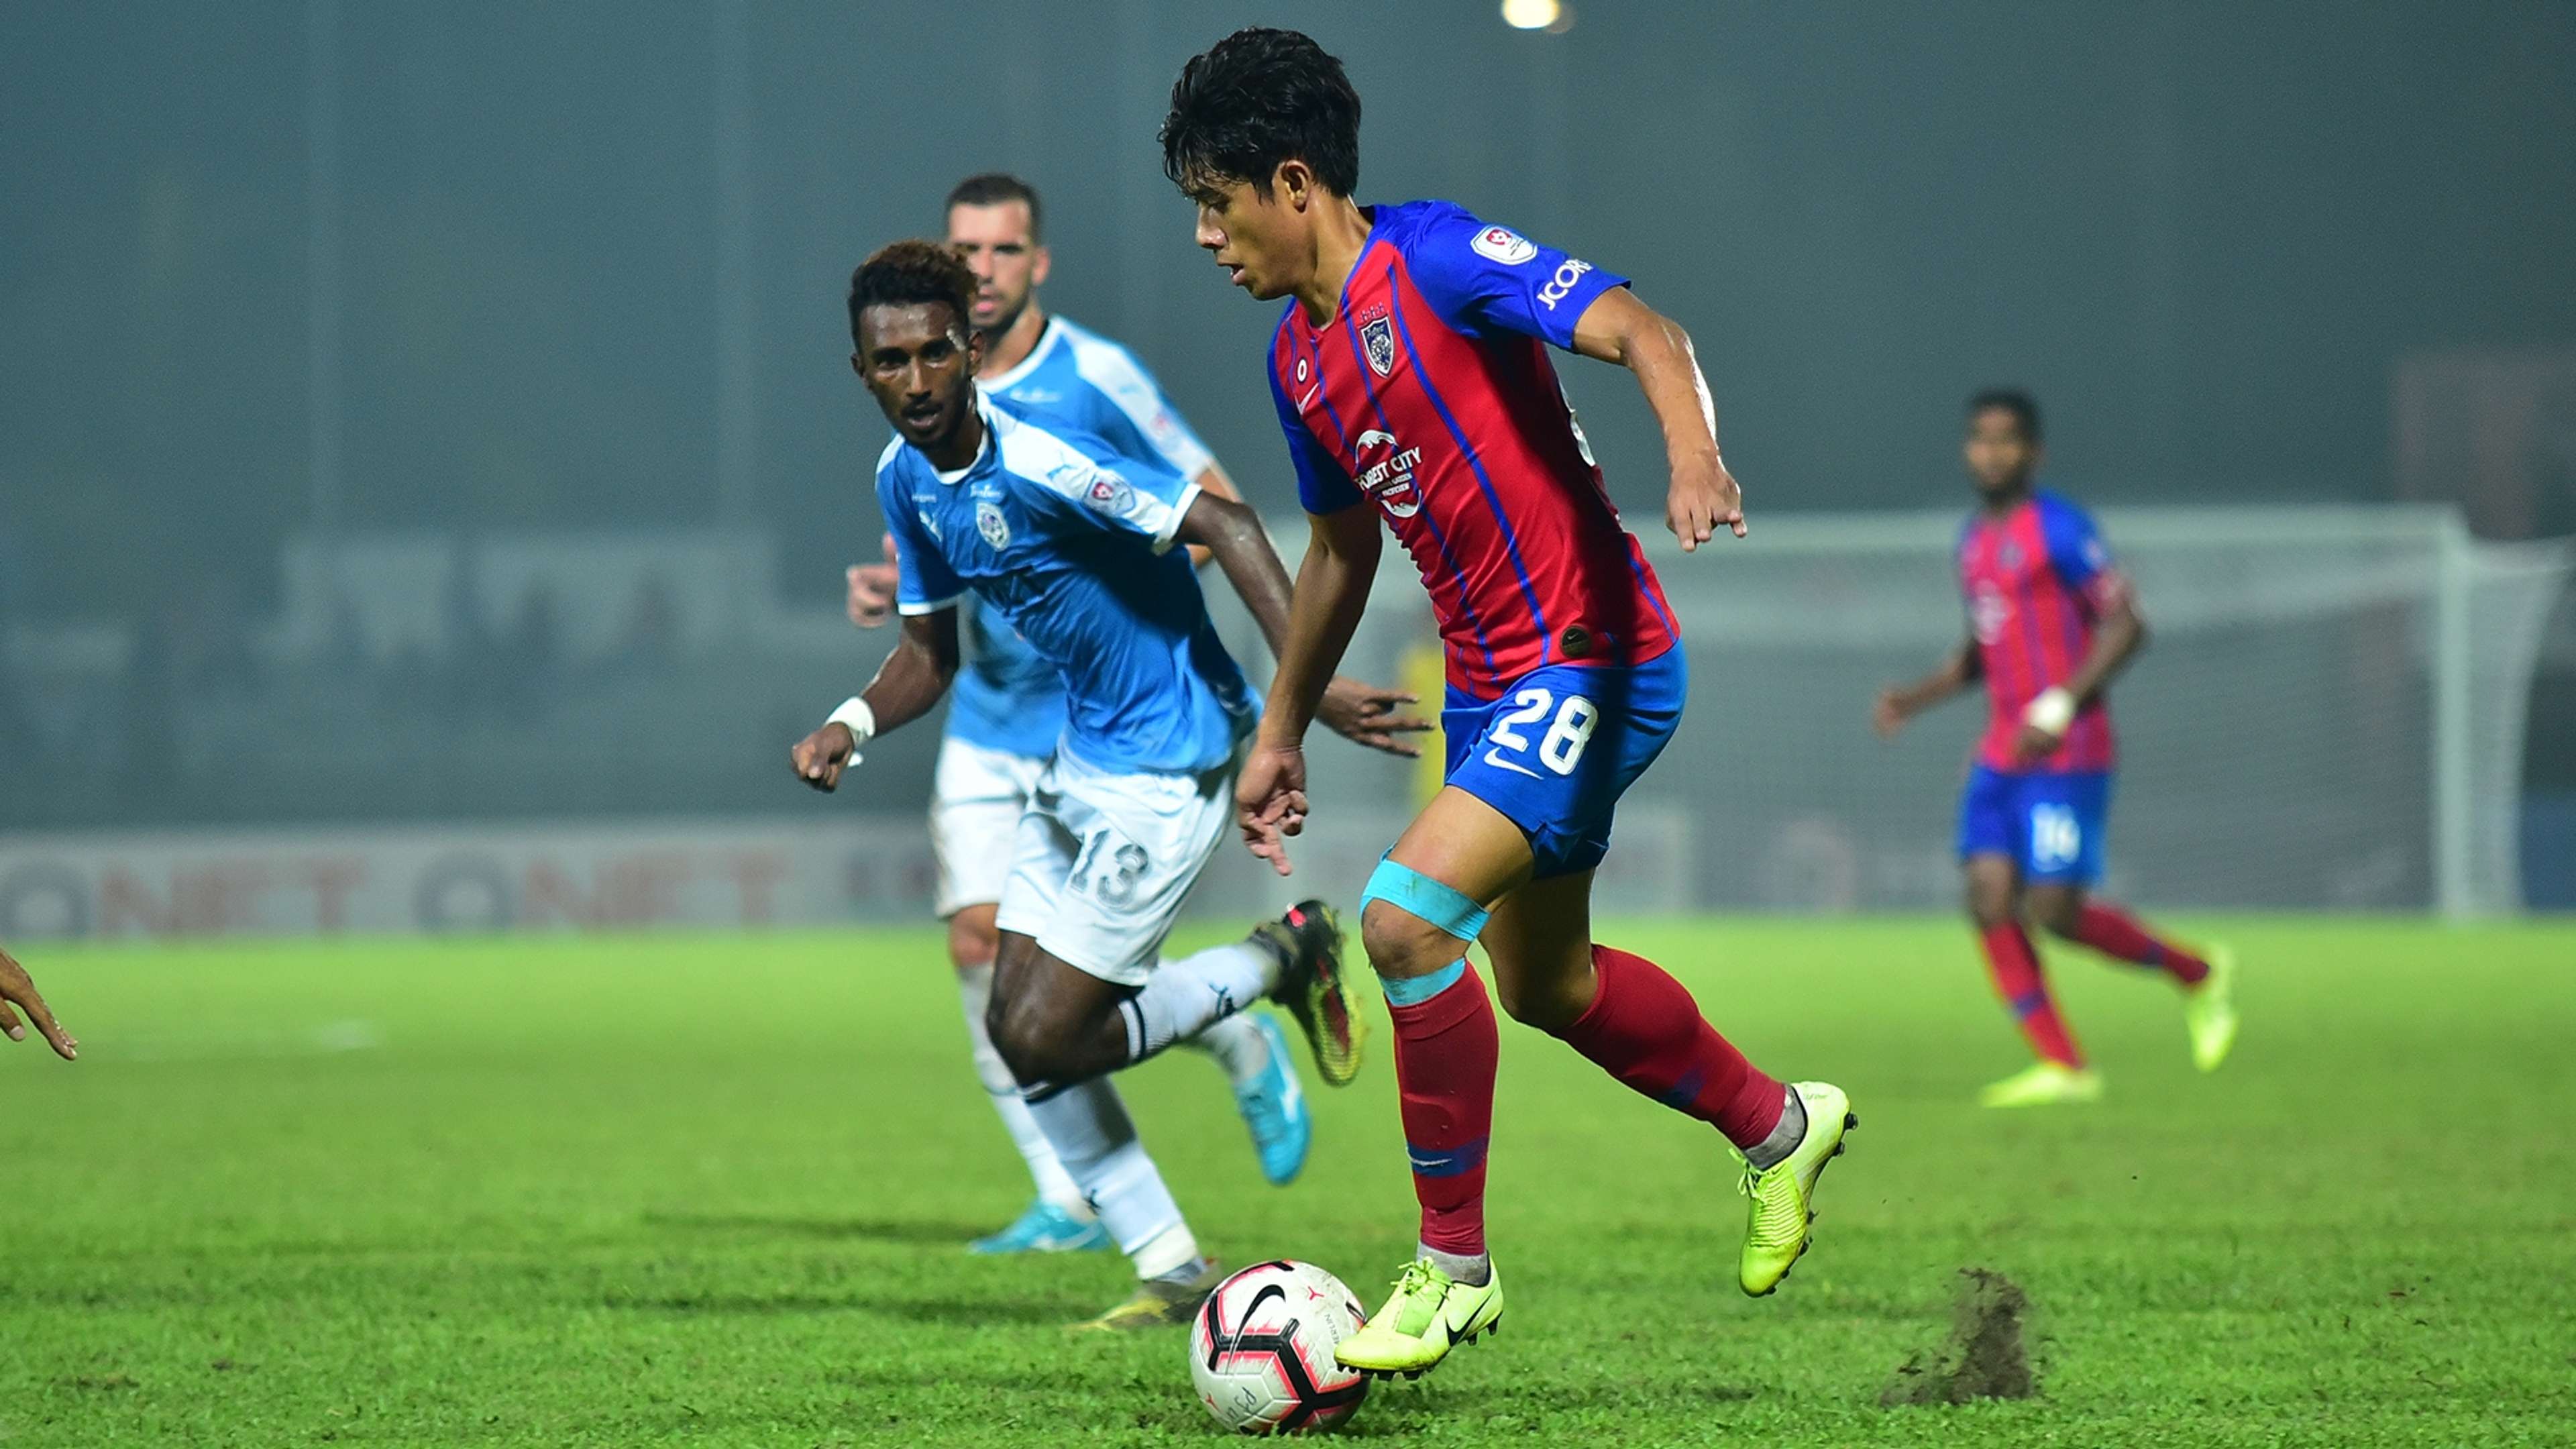 Syafiq Ahmad, Petaling Jaya City FC v Johor Darul Ta'zim, Malaysia Cup, 13 Sep 2019